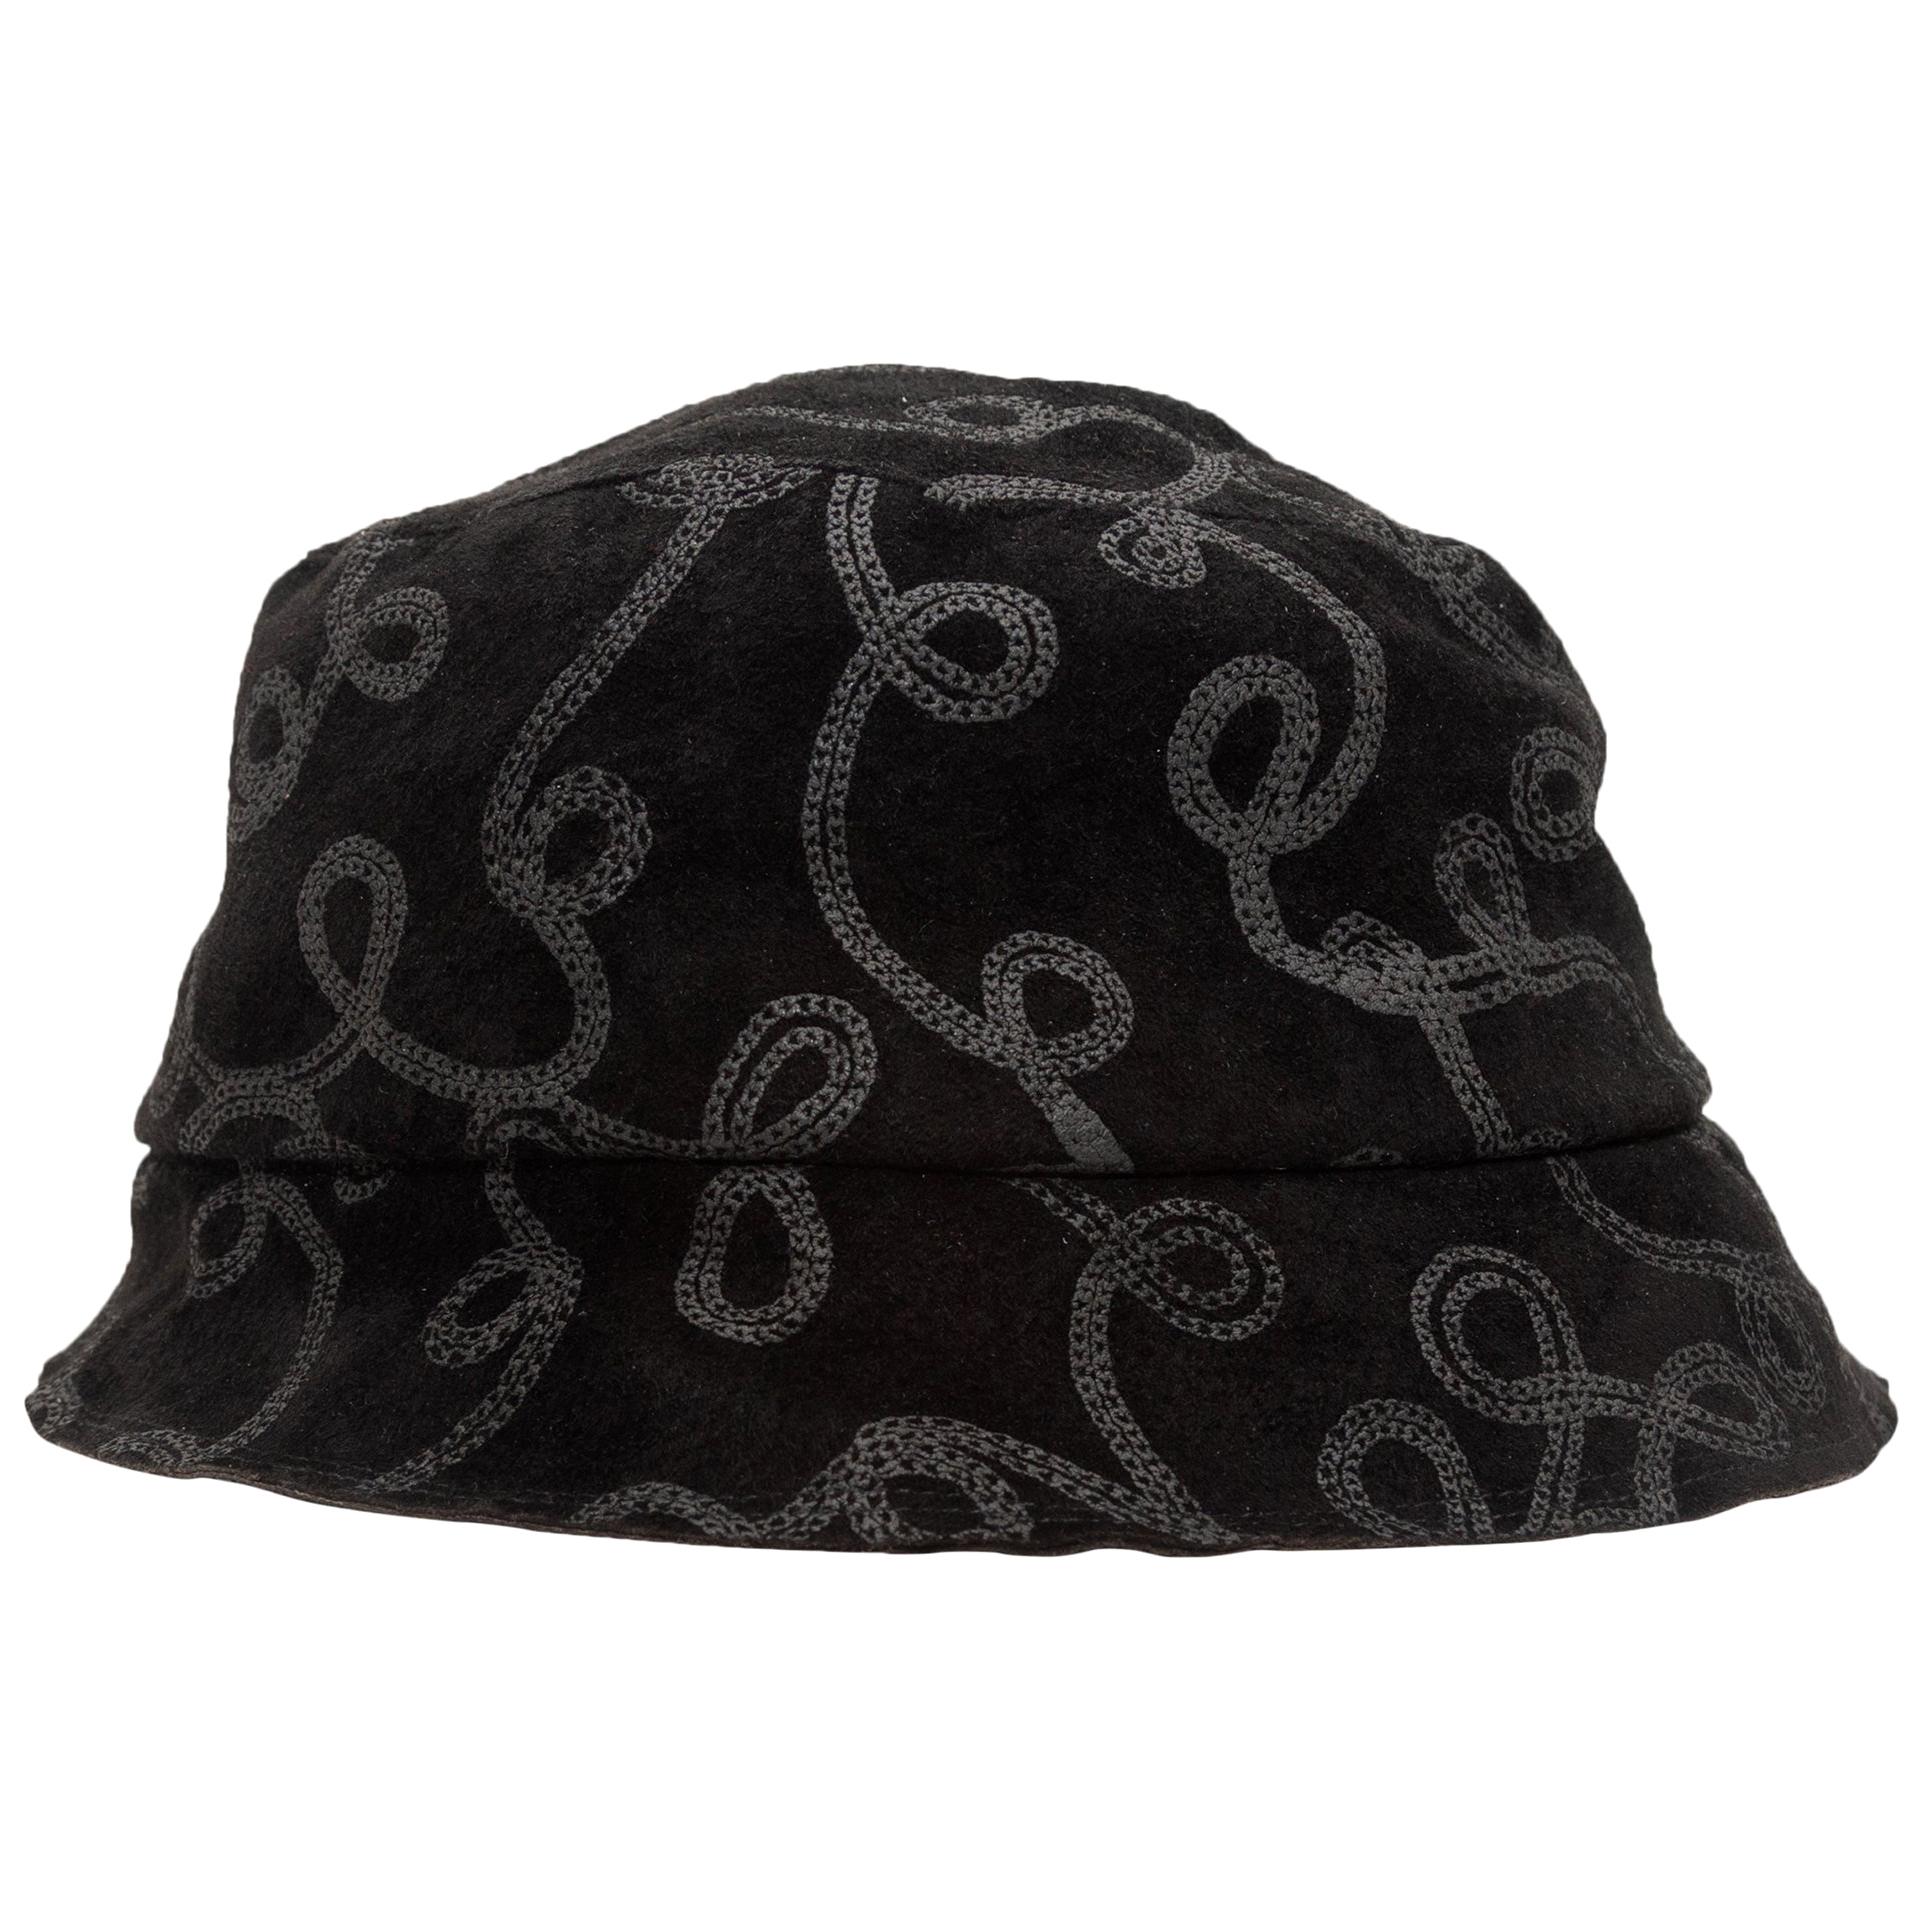 Patricia Underwood Black Patterned Bucket Hat